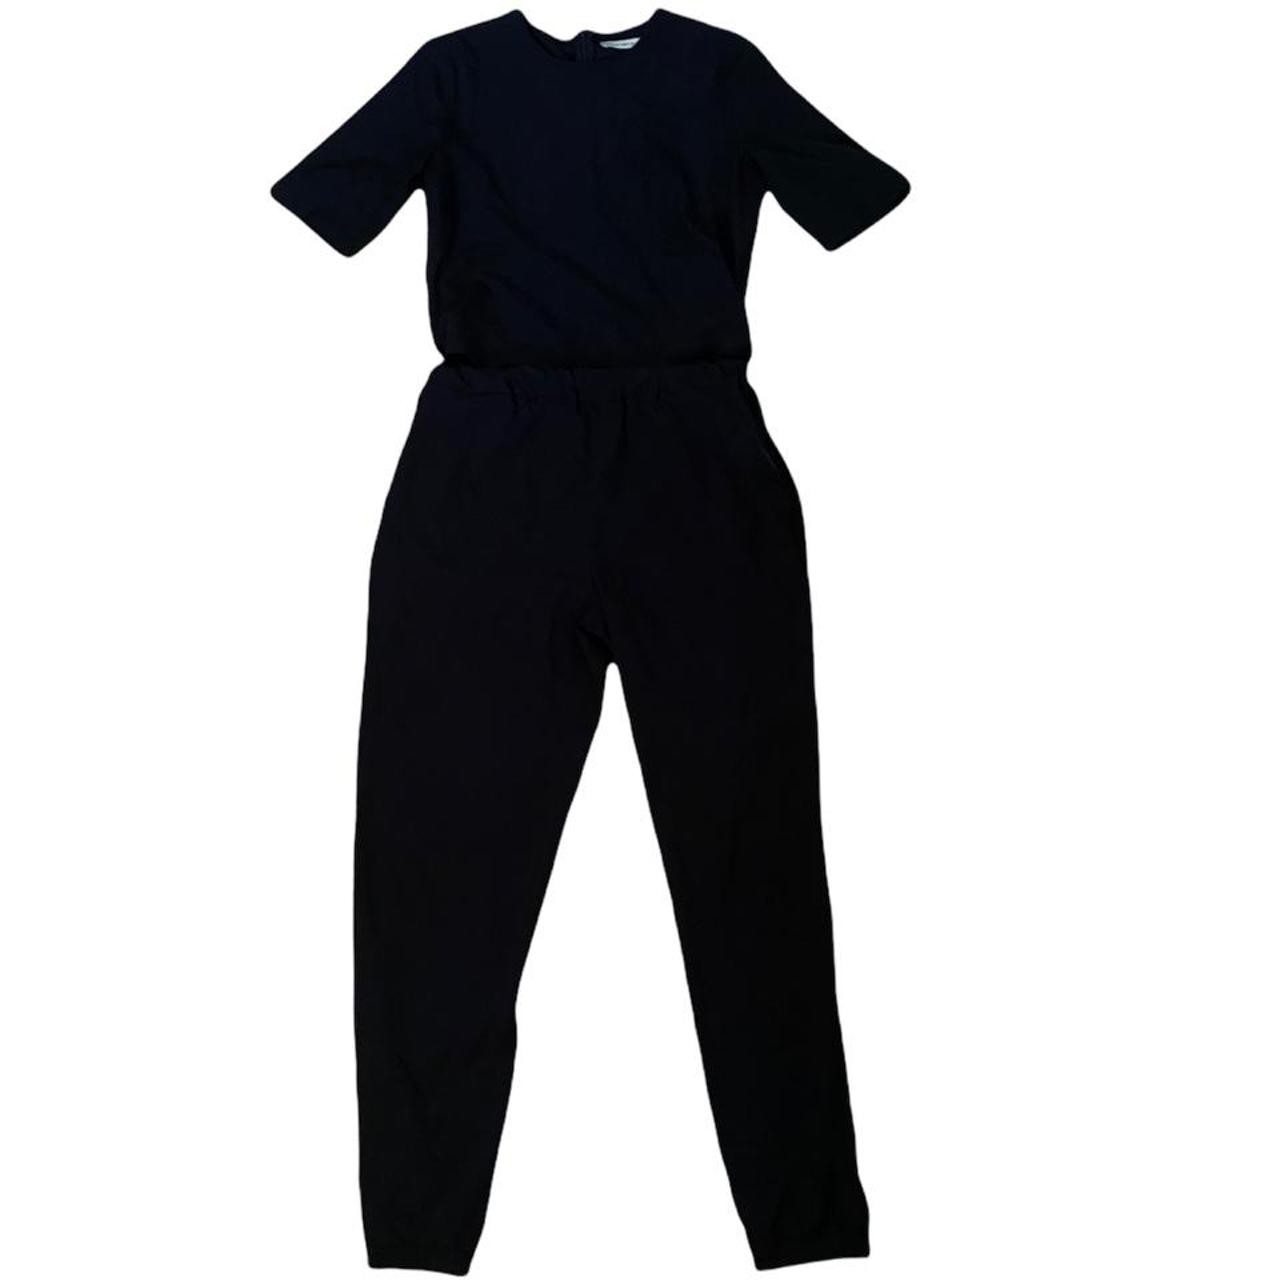 Product Image 1 - Modern black jumpsuit. Has cutout